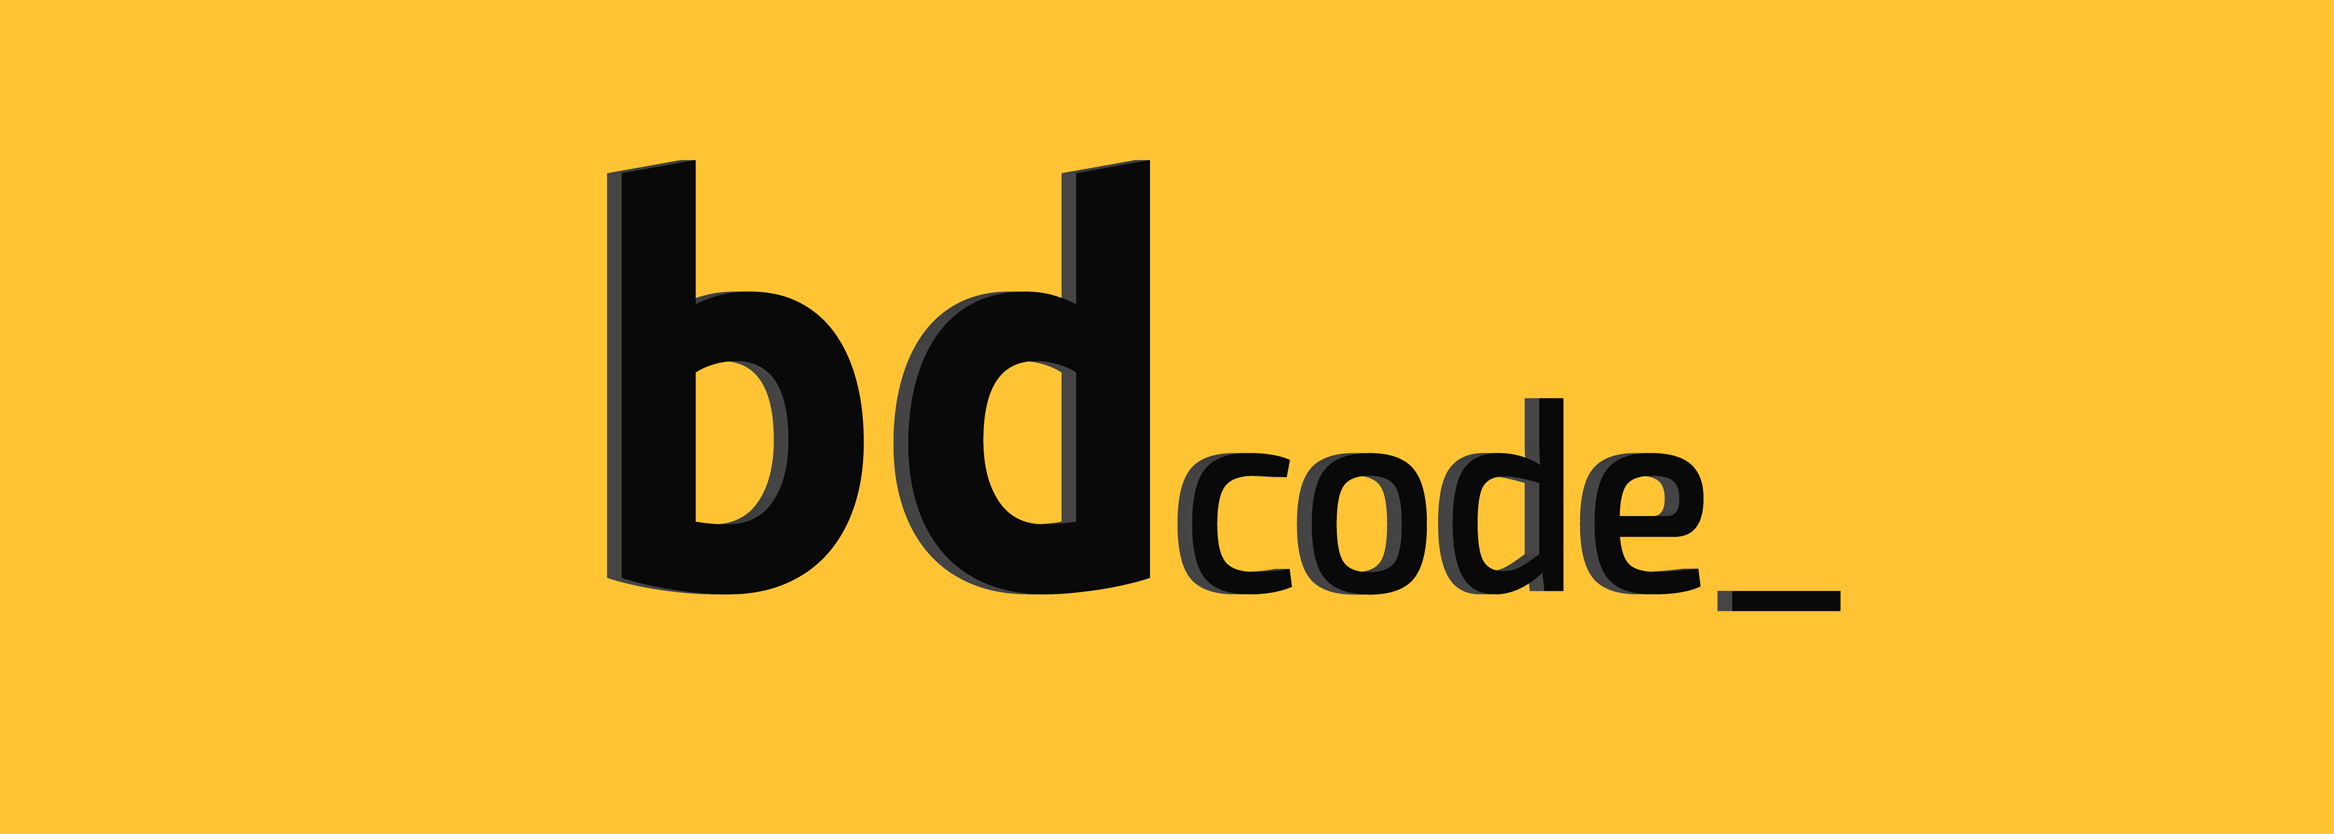 bdcode